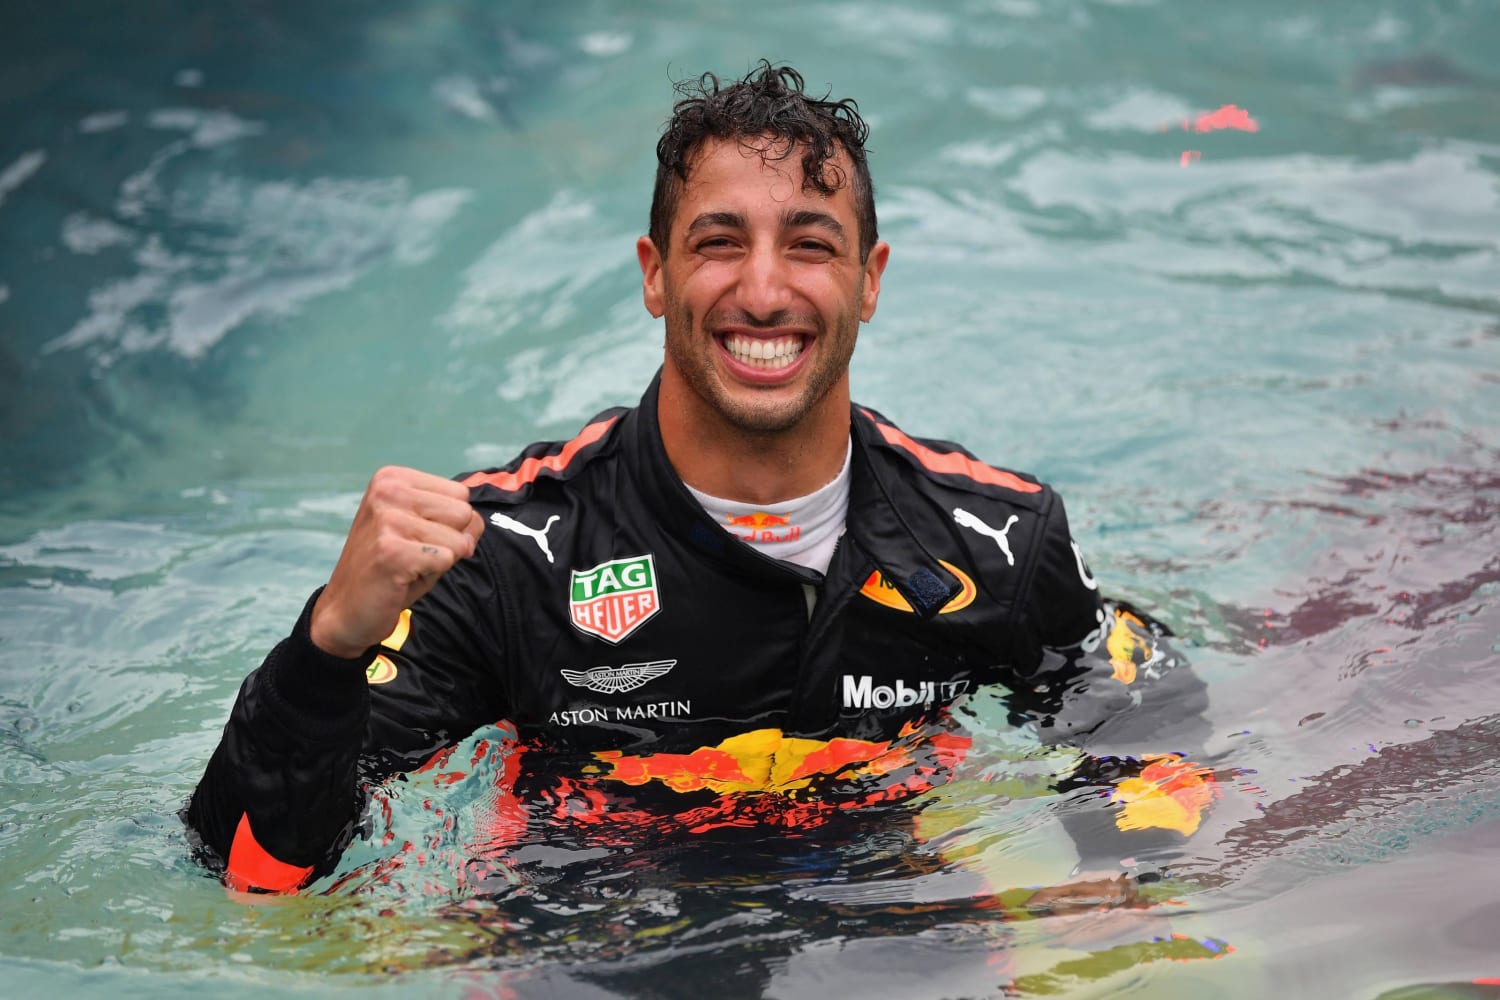 F1 Monaco GP 2018 retrospective: How Ricciardo banished his '16 ghosts